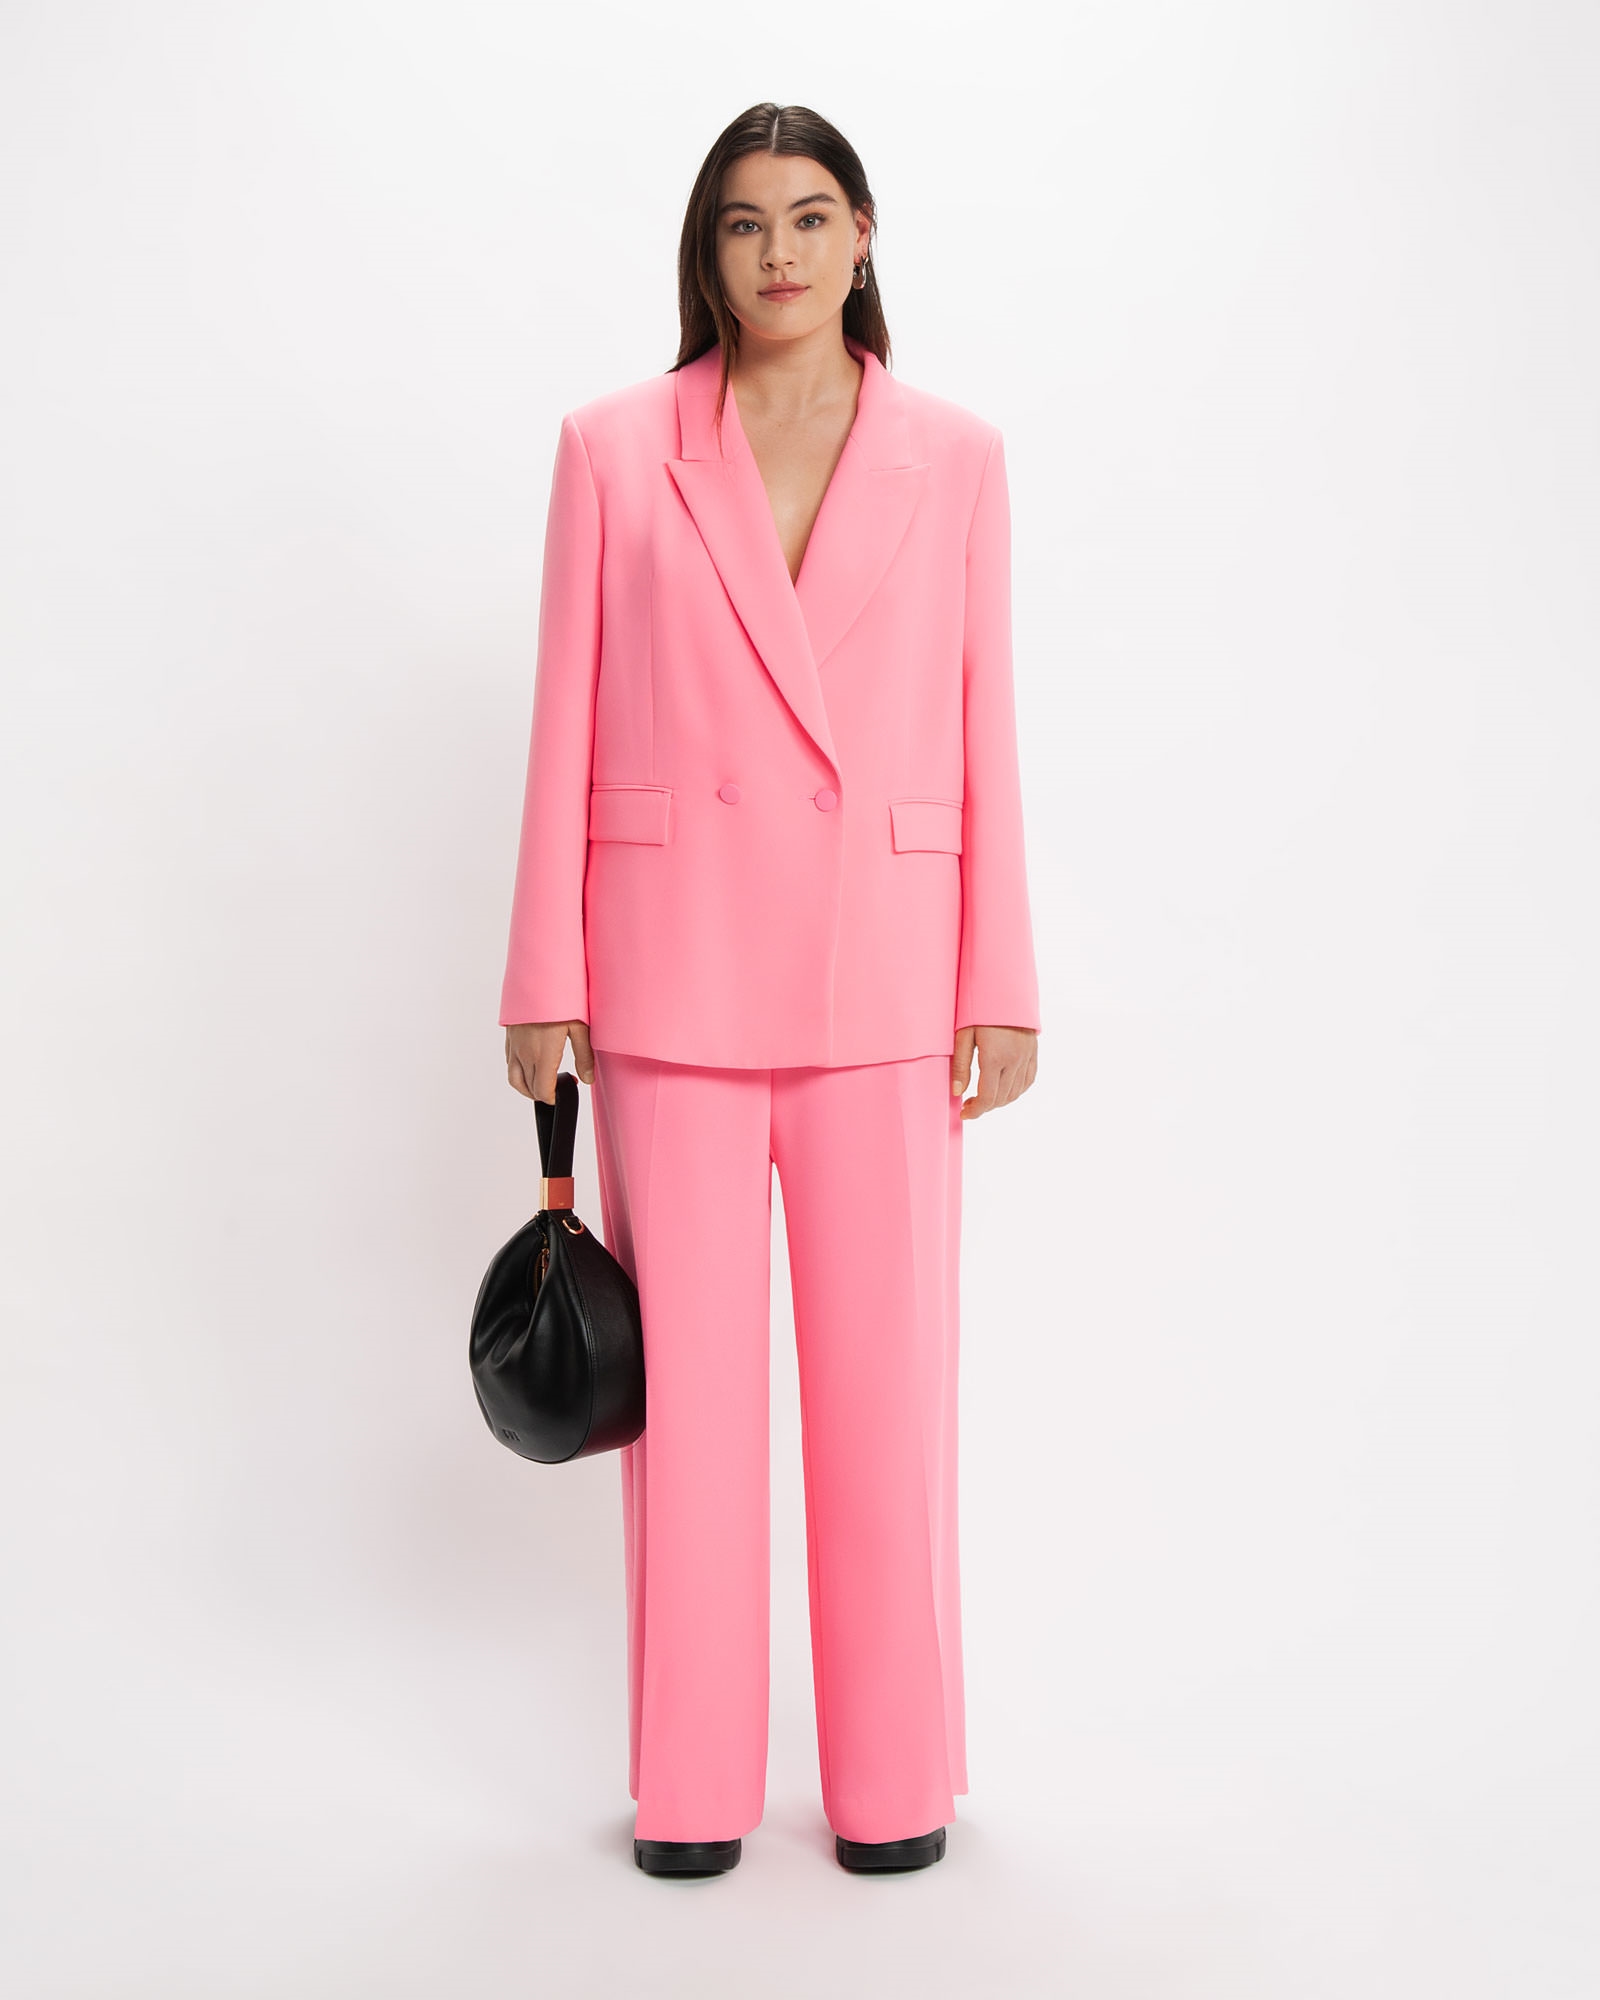 Neon Pink Flat Front Wide Leg Pant | Buy Pants Online - Cue